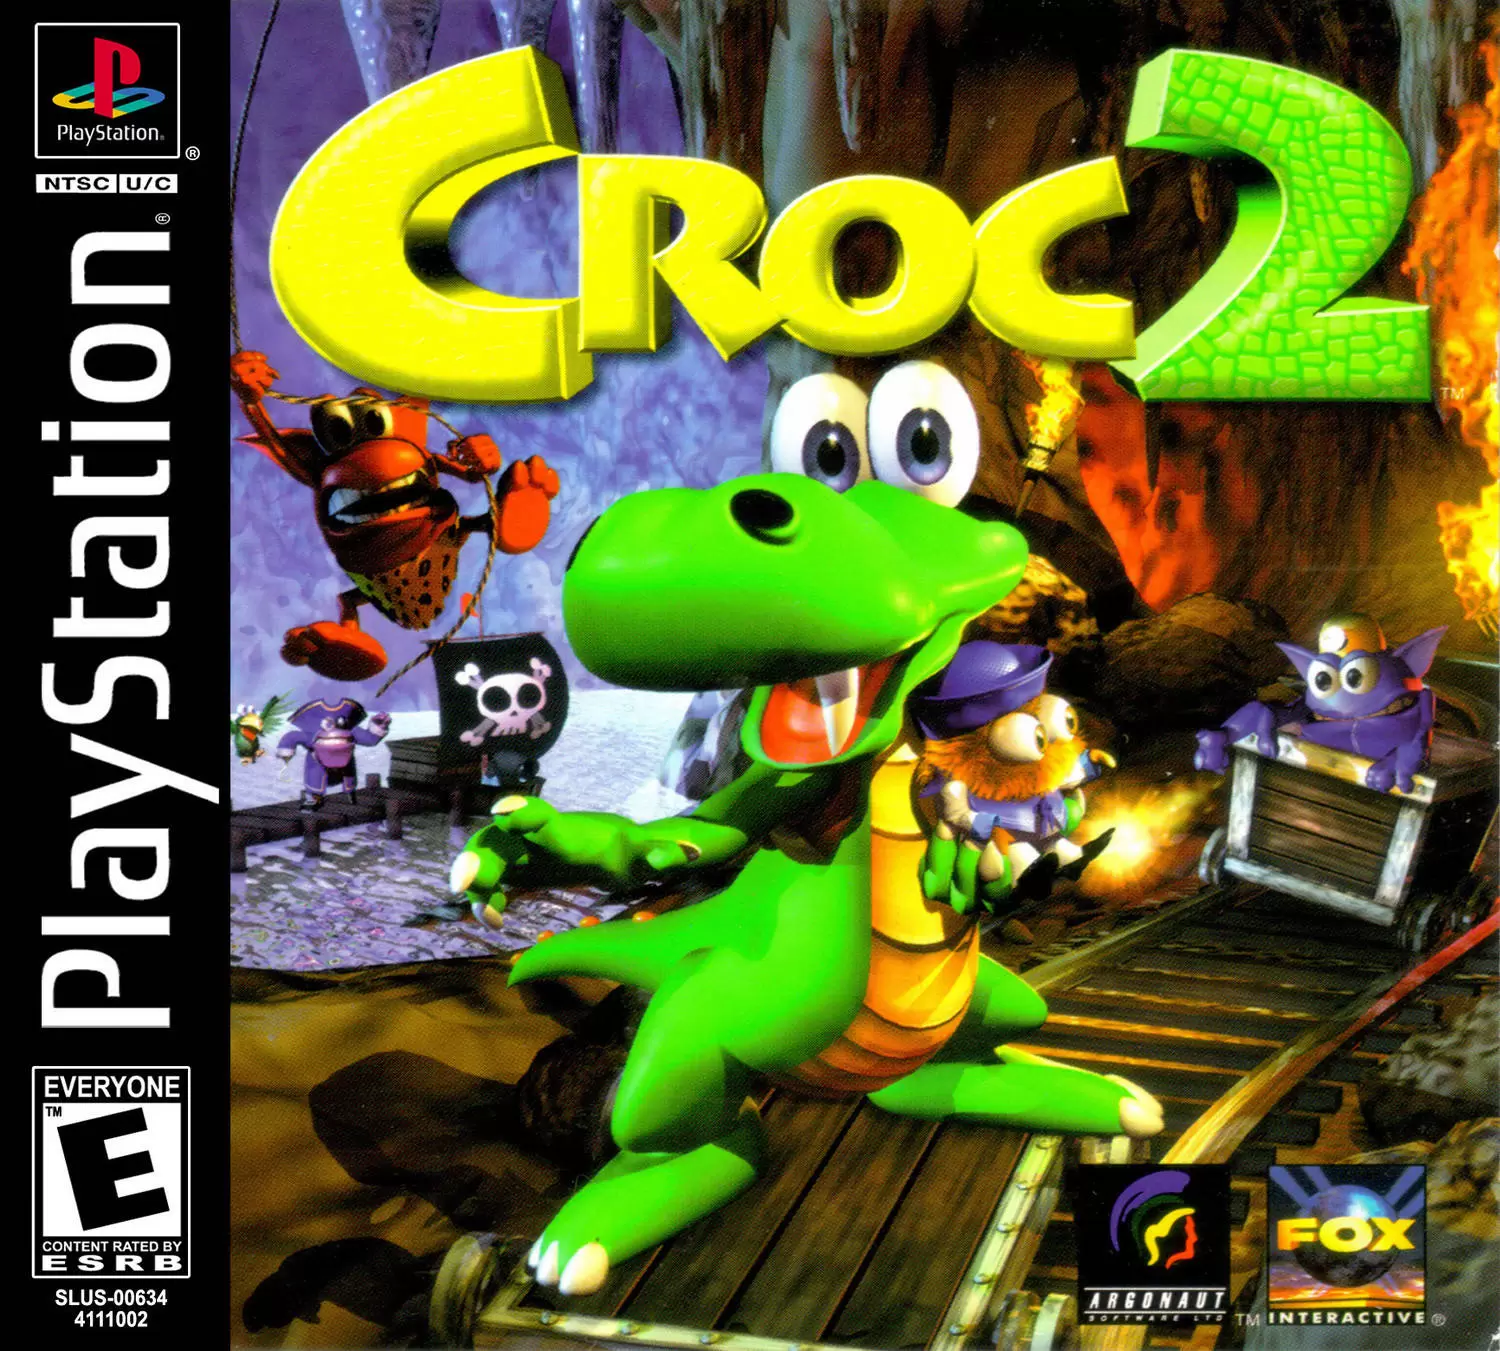 Playstation games - Croc 2